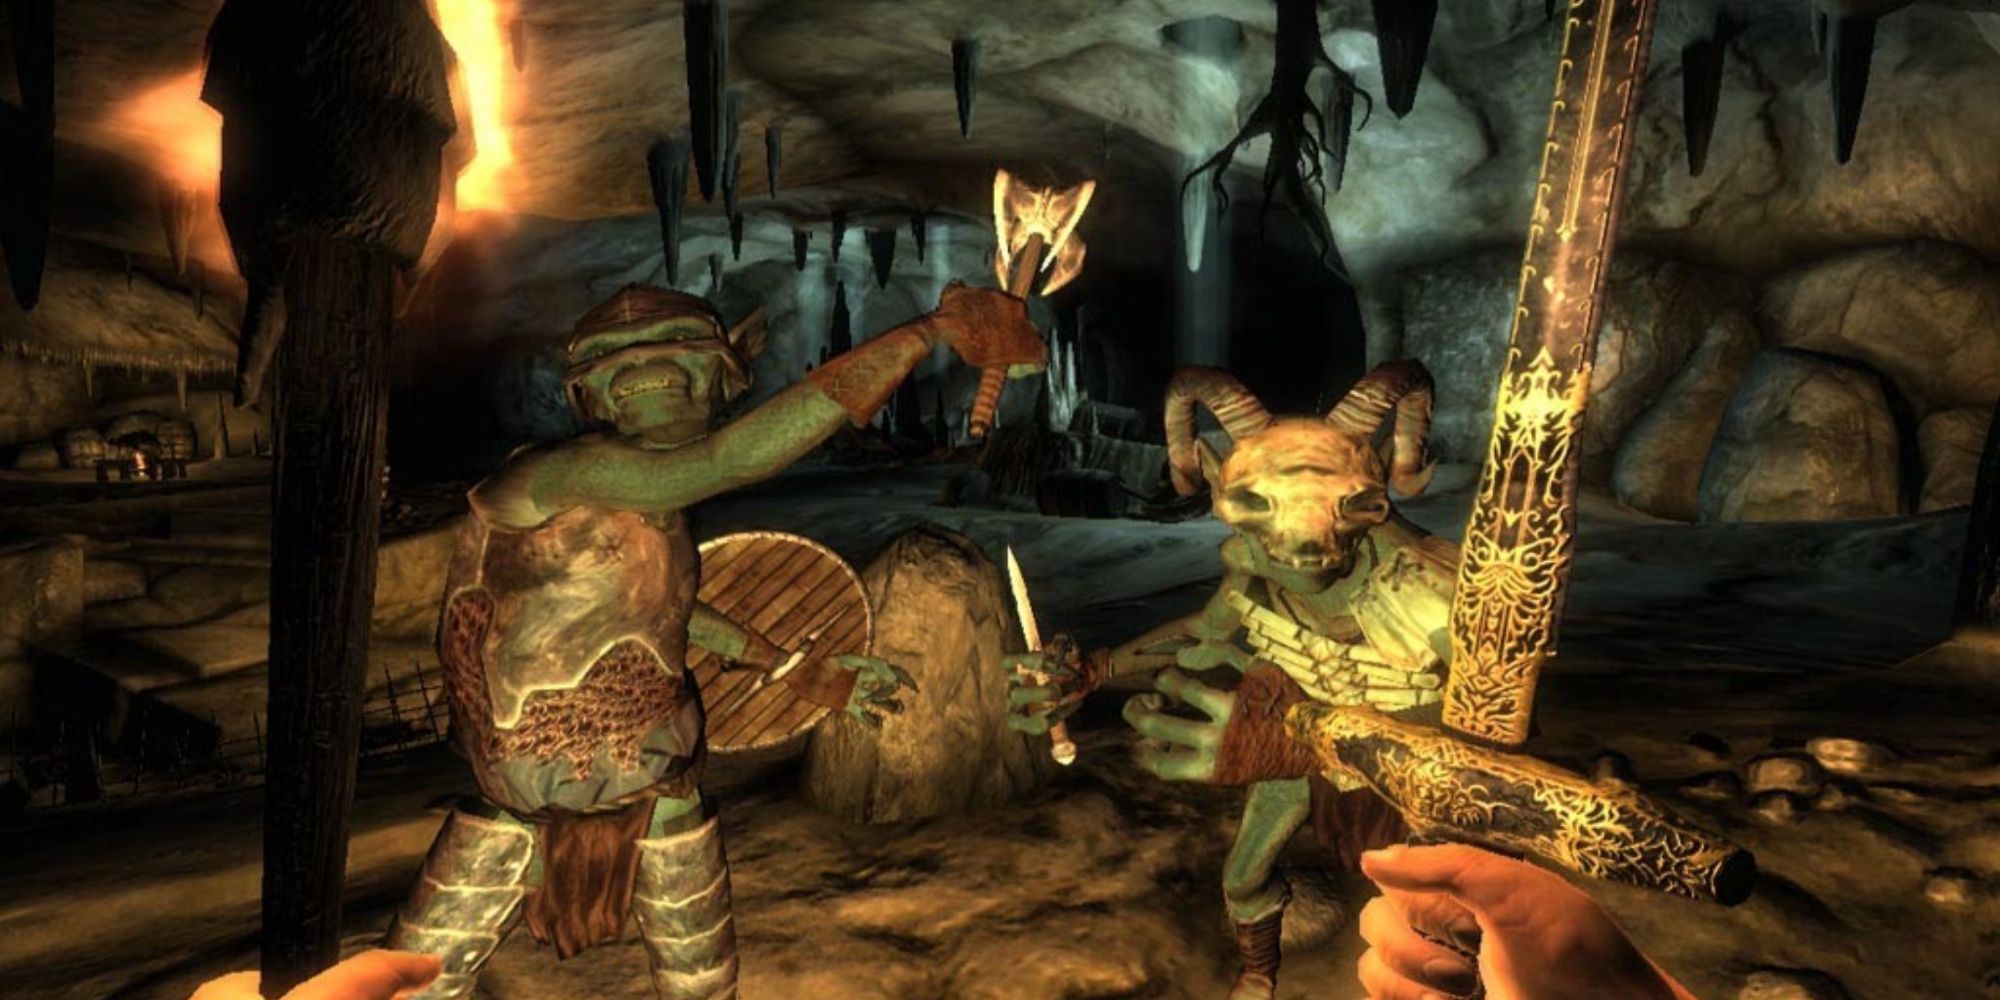 Fighting goblins in The Elder Scrolls 4 Oblivion using sword and torch